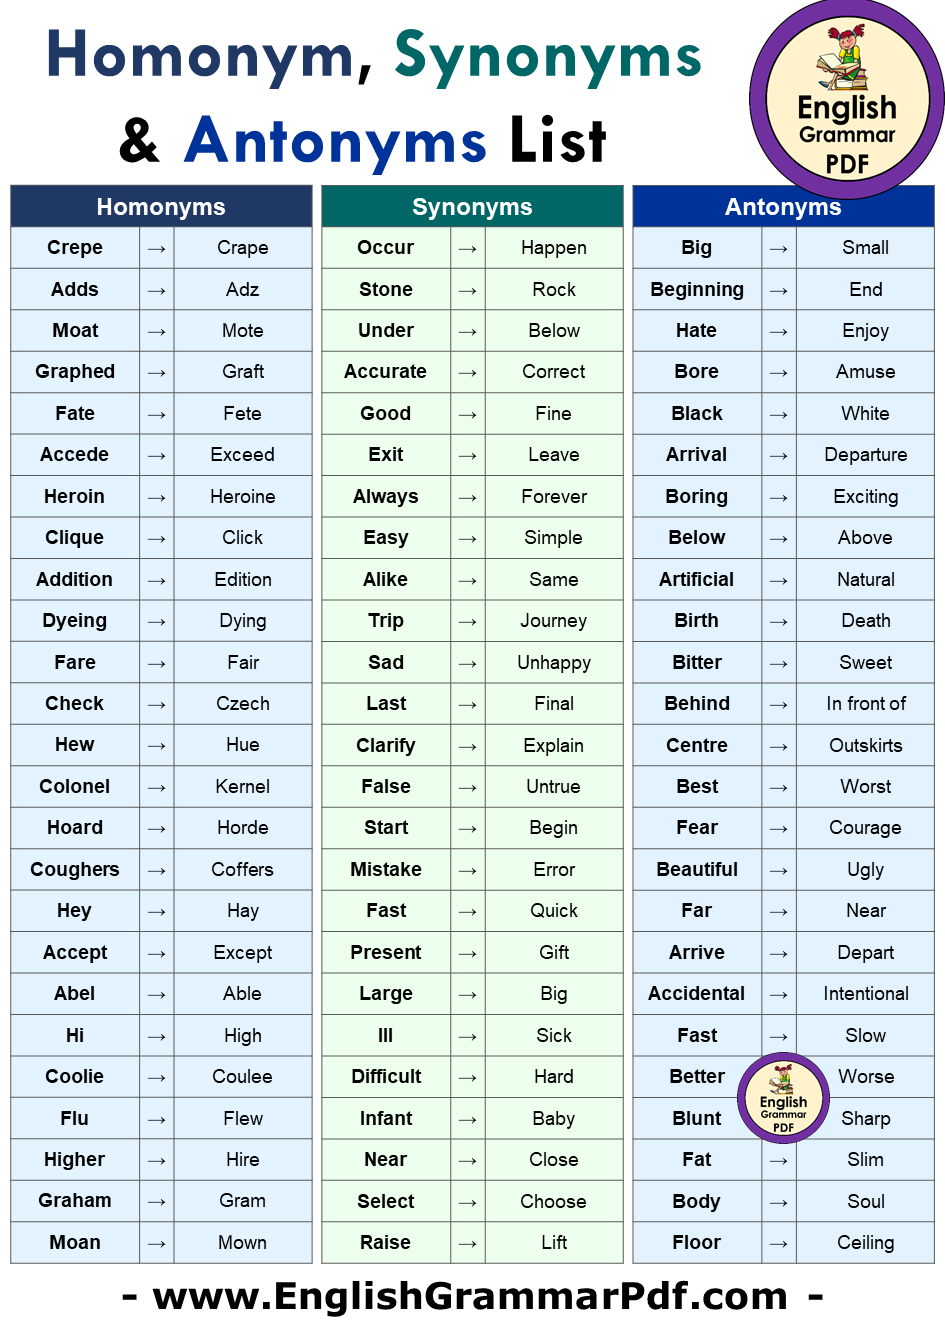 Homonyms, Synonyms, Antonyms List in English